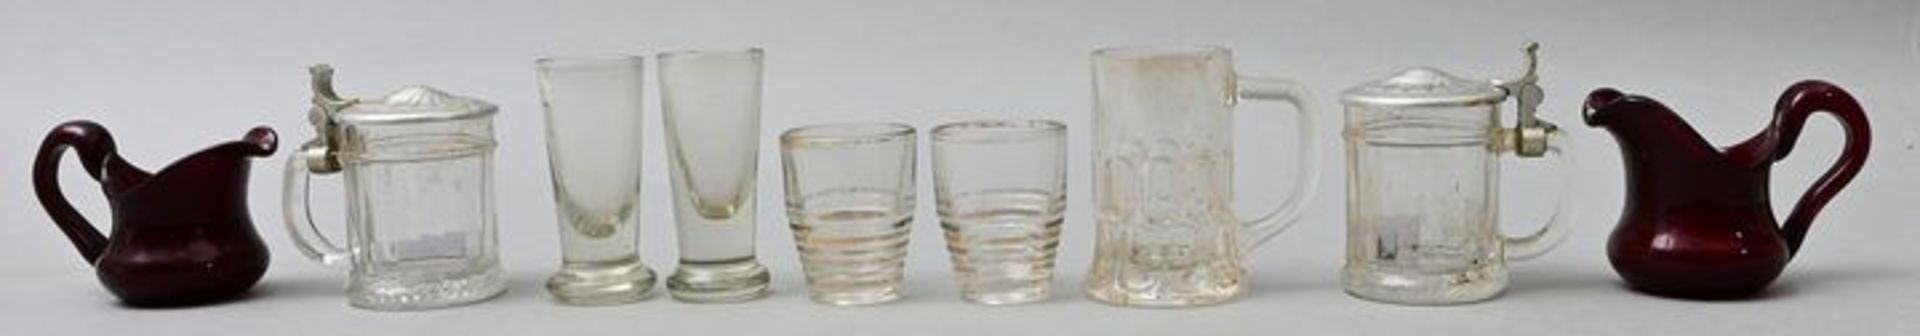 Neun Teile Miniaturglas / Nine pieces miniature glass